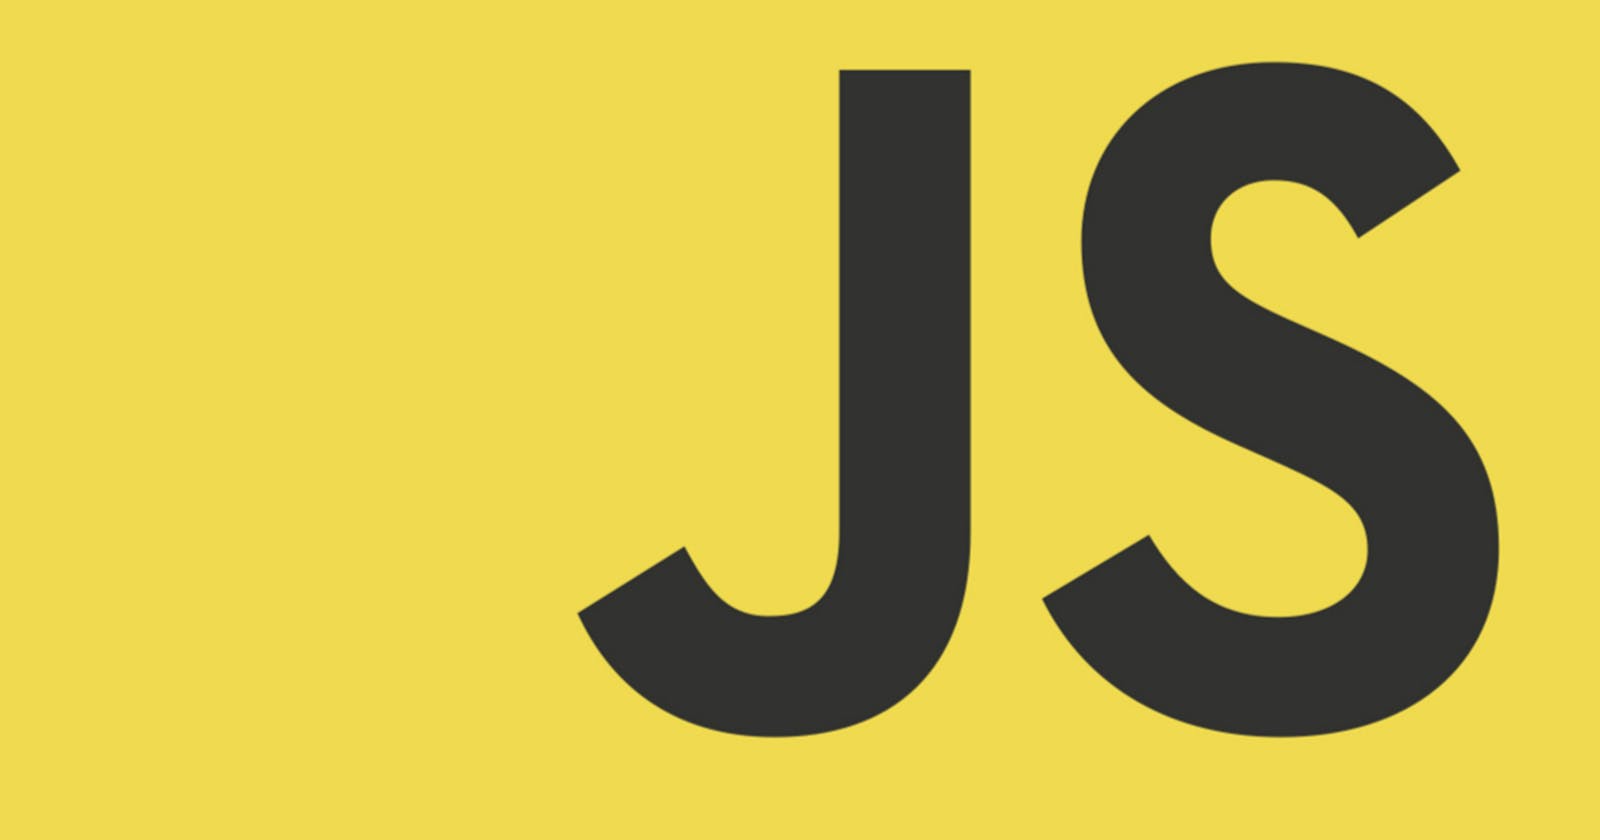 Type Casting in JavaScript